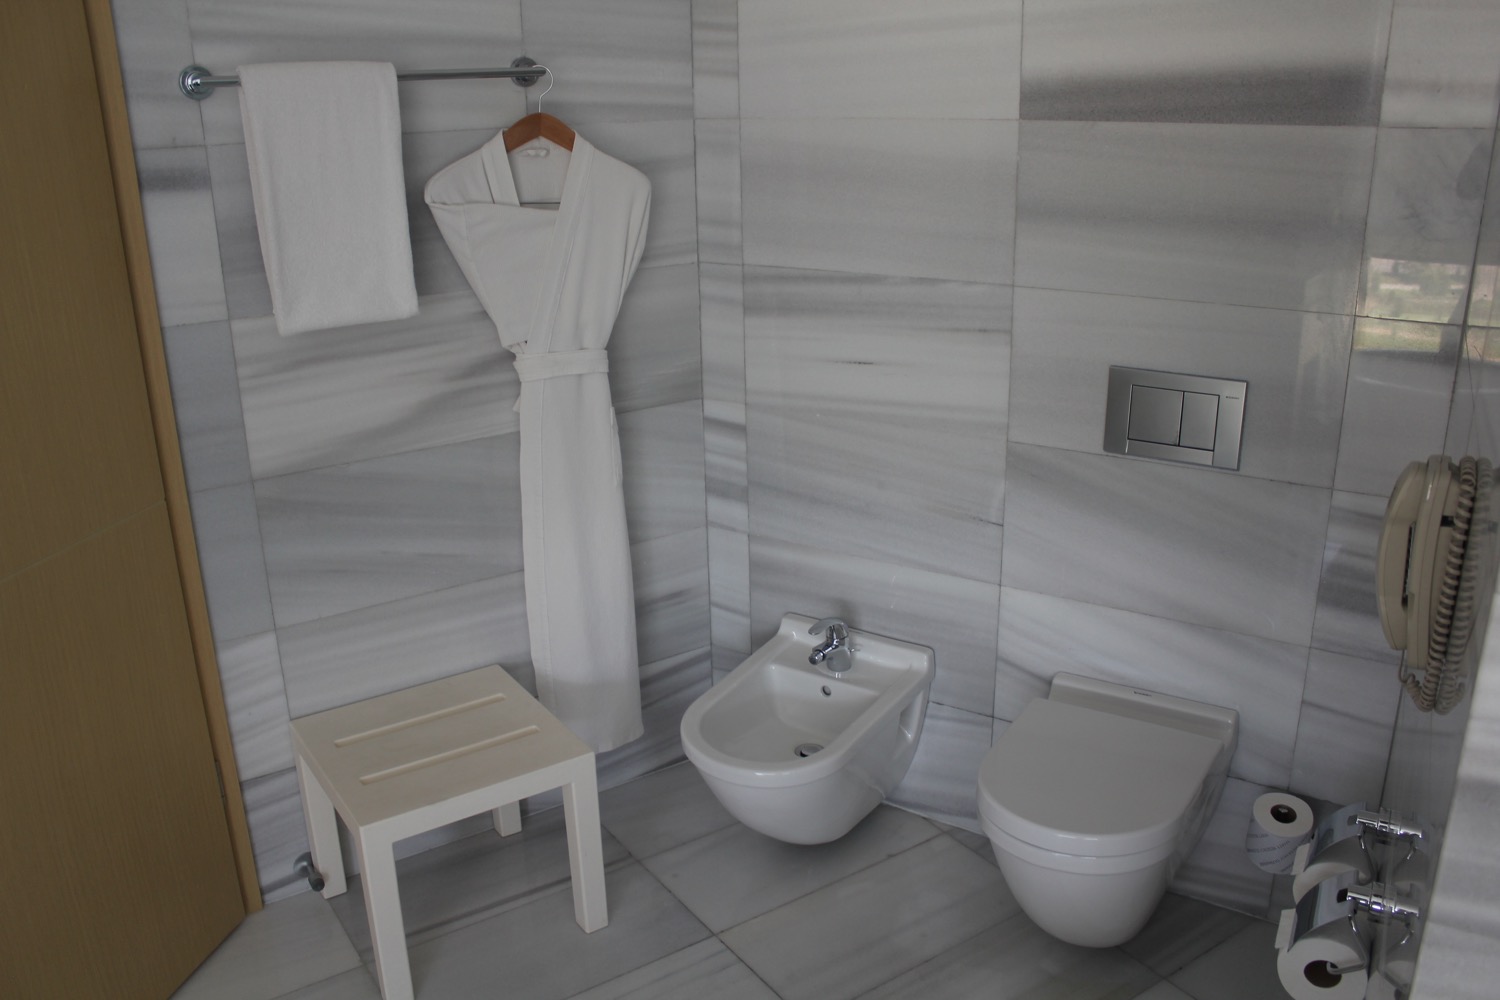 a bathroom with a white robe and a bidet